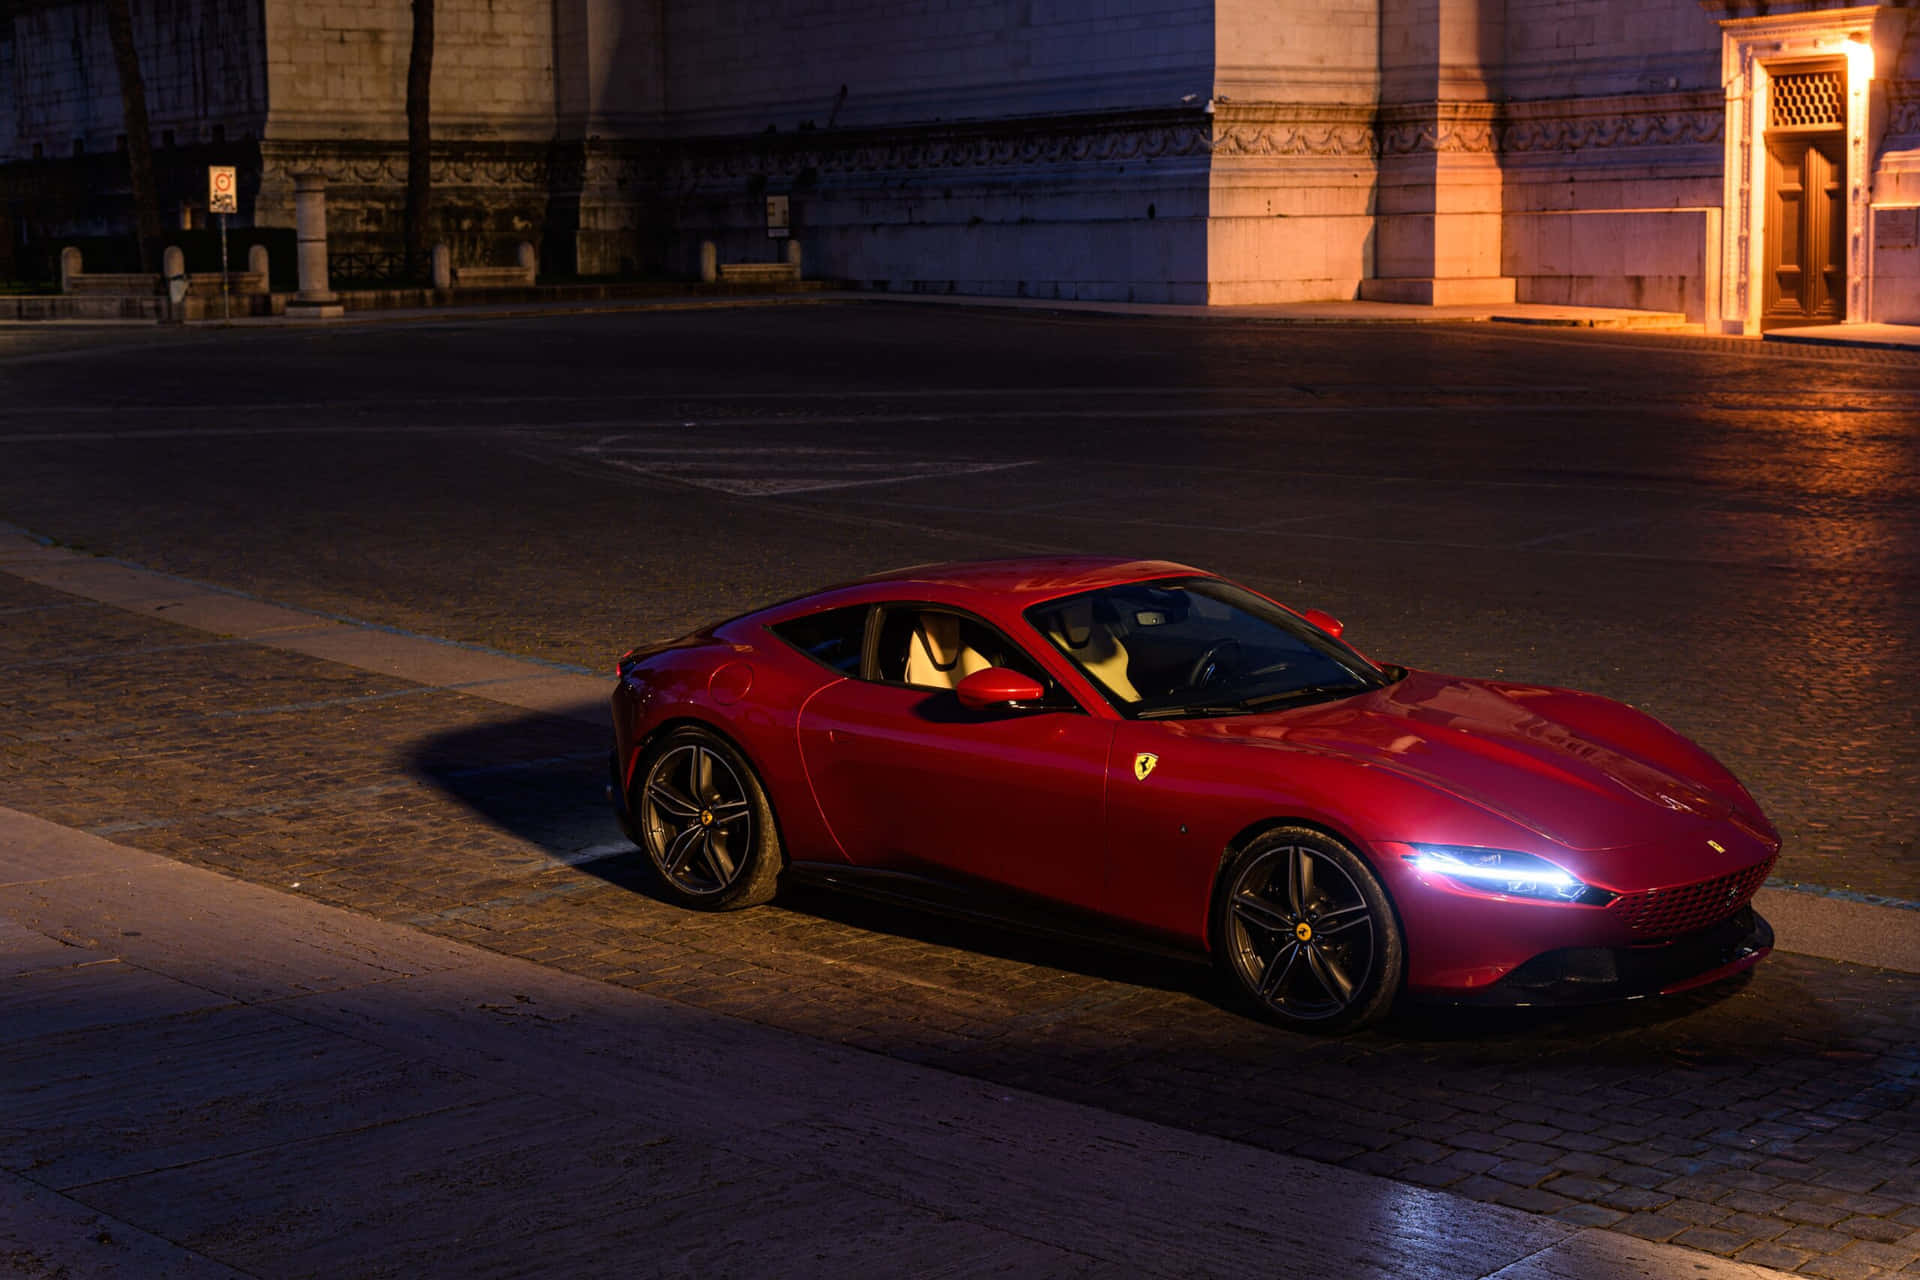 Caption: Sleek and Contemporary Ferrari Roma Wallpaper